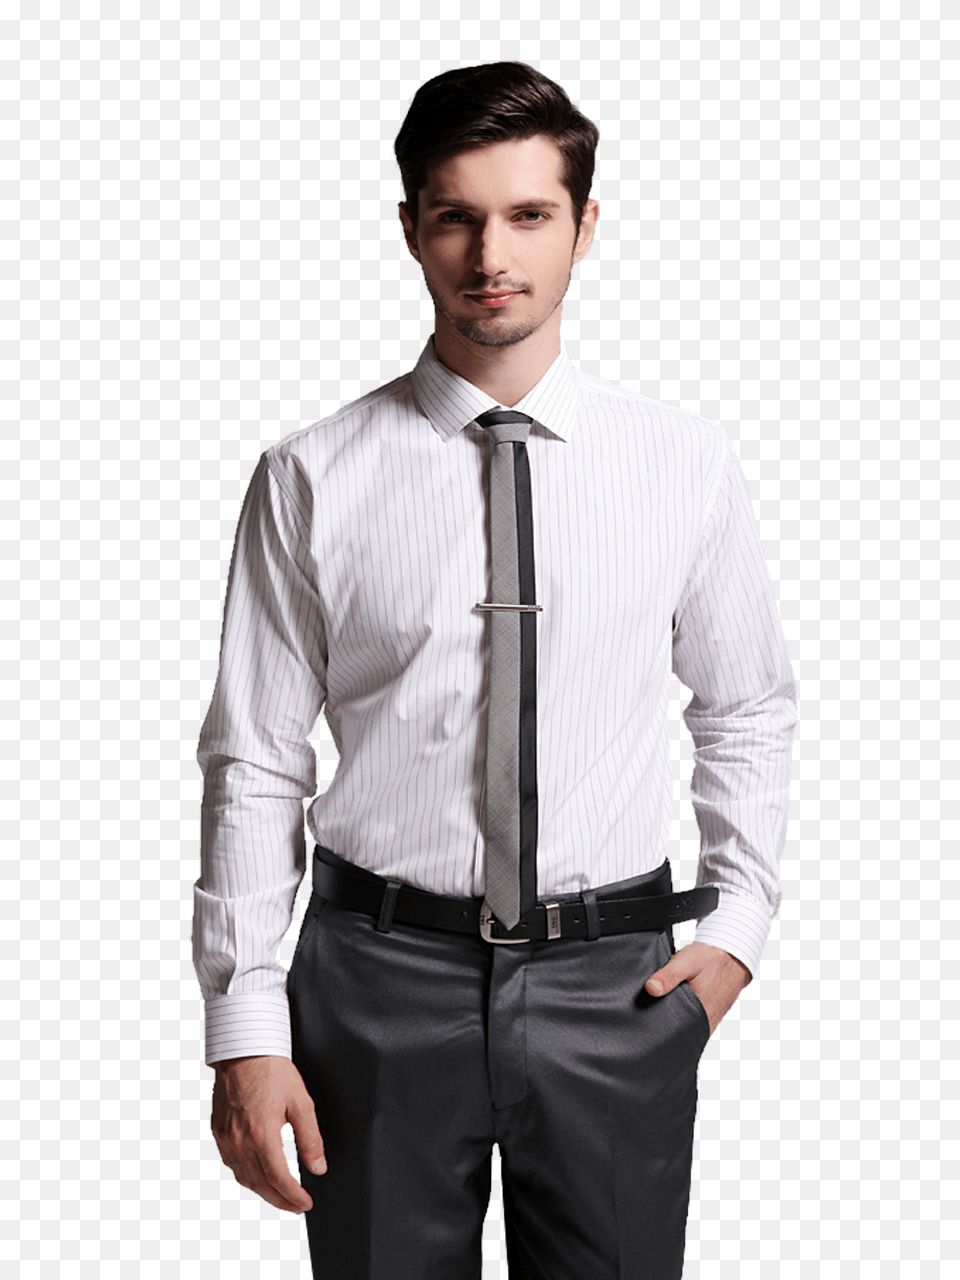 Download Businessman Image Chris Pine Star Trek, Accessories, Shirt, Tie, Formal Wear Free Png